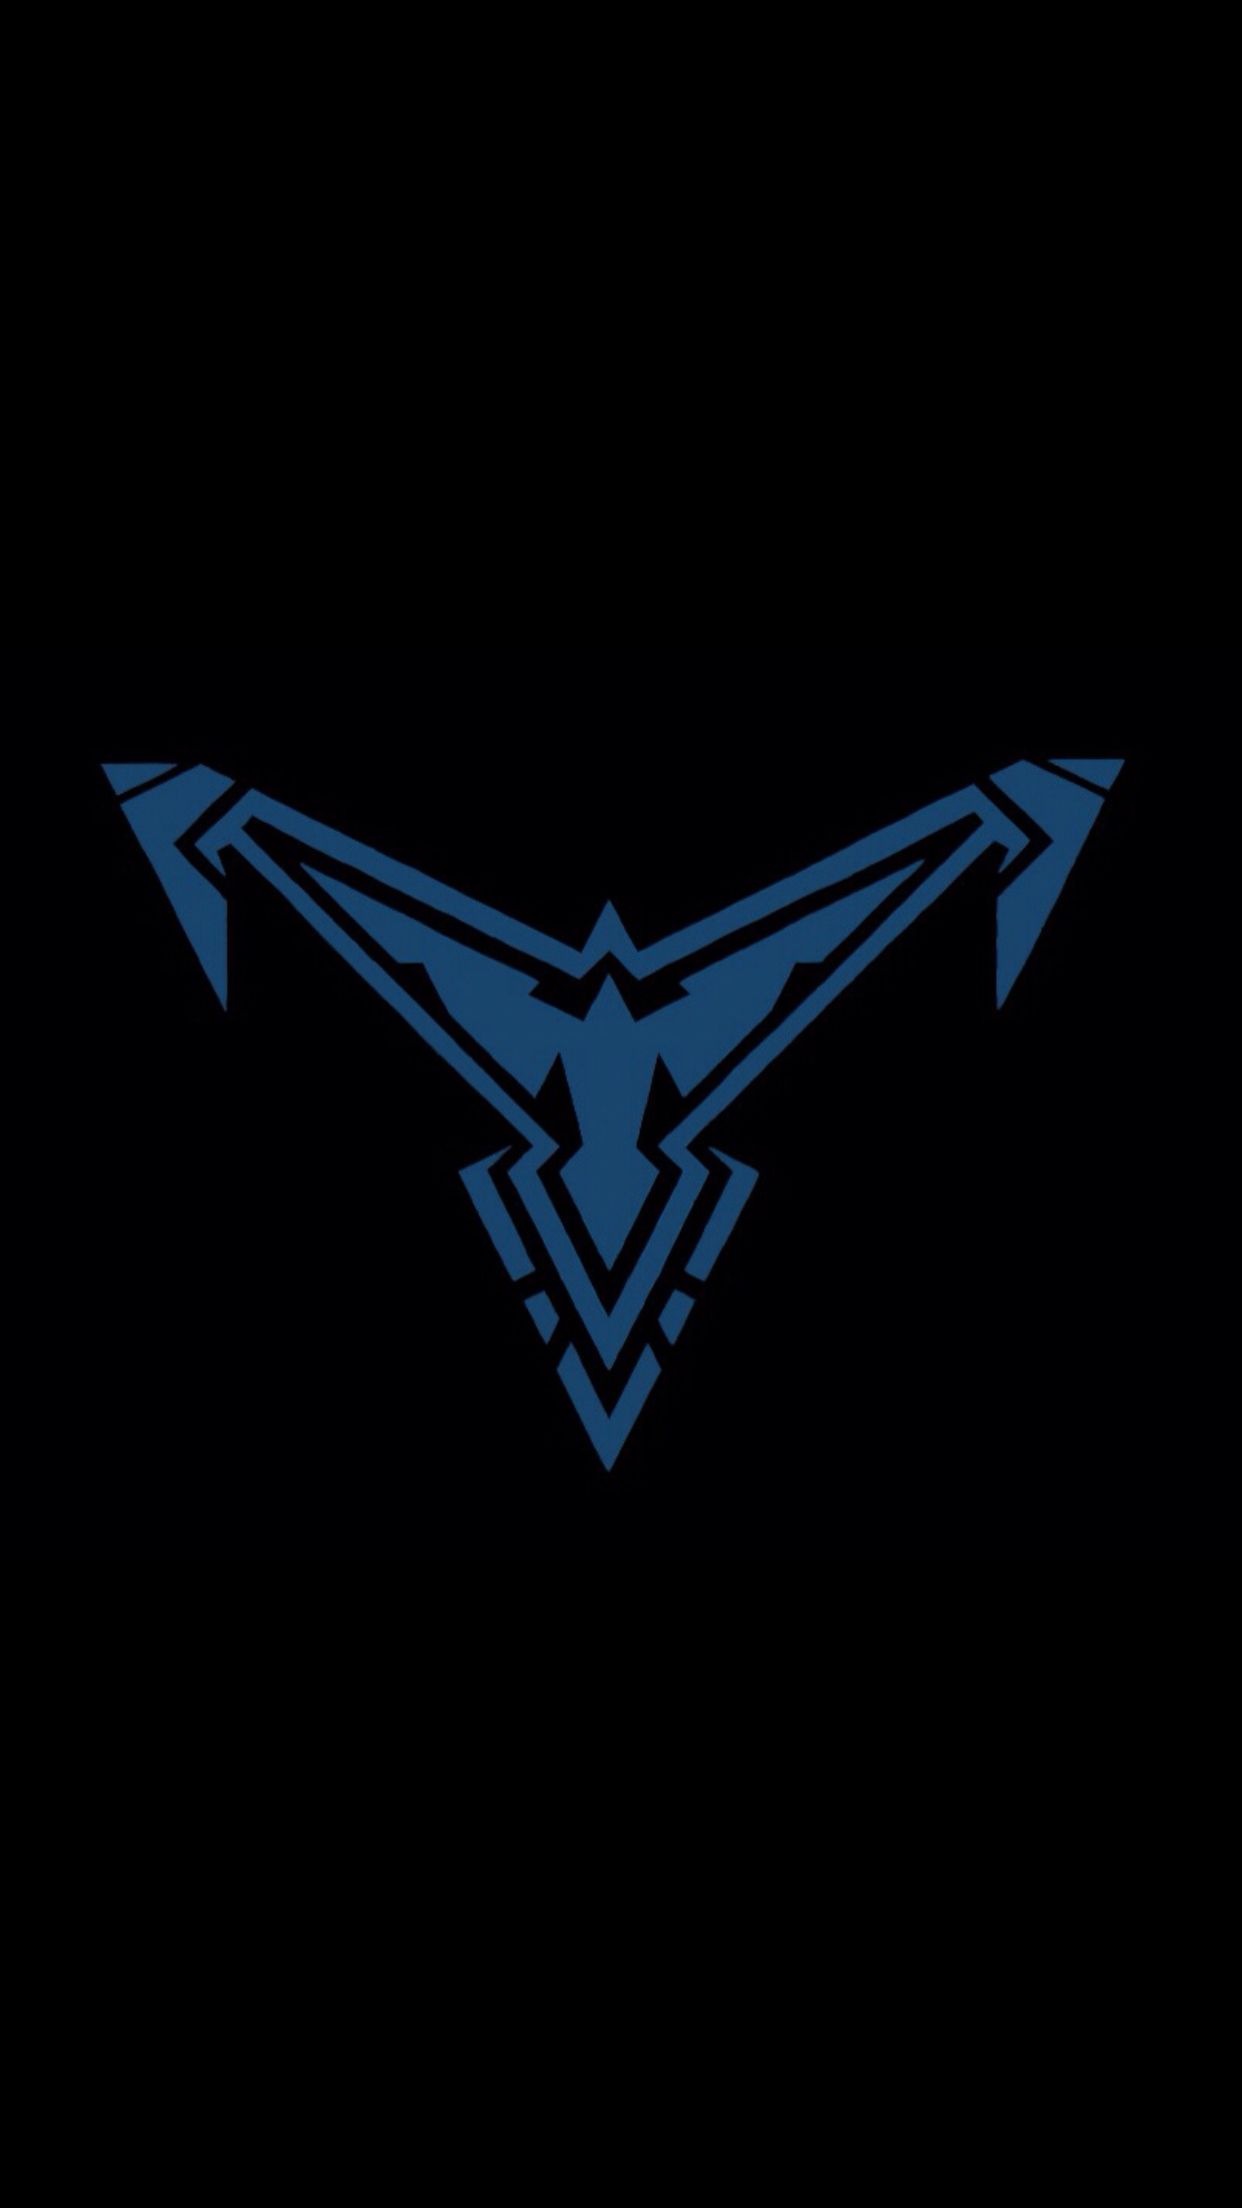 tema de fondo de pantalla,negro,emblema,azul eléctrico,símbolo,fuente